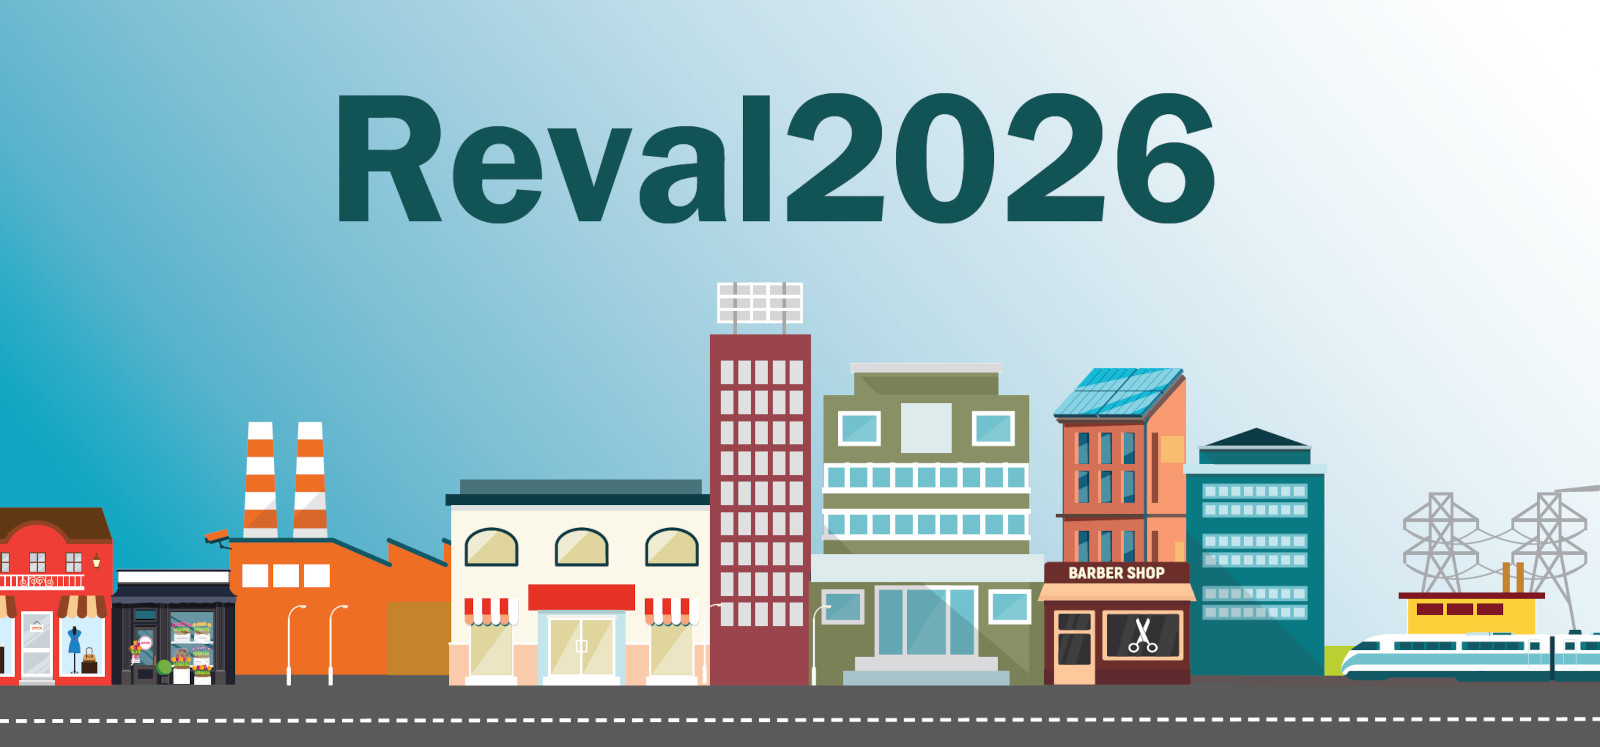 Reval 2026